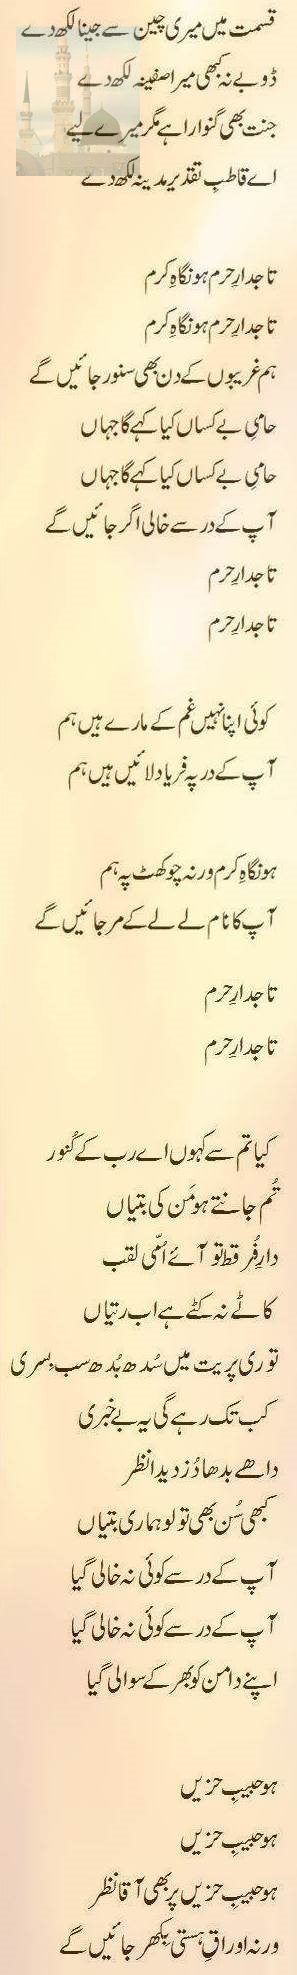 Tjadar e Haram lyrics in Urdu 1